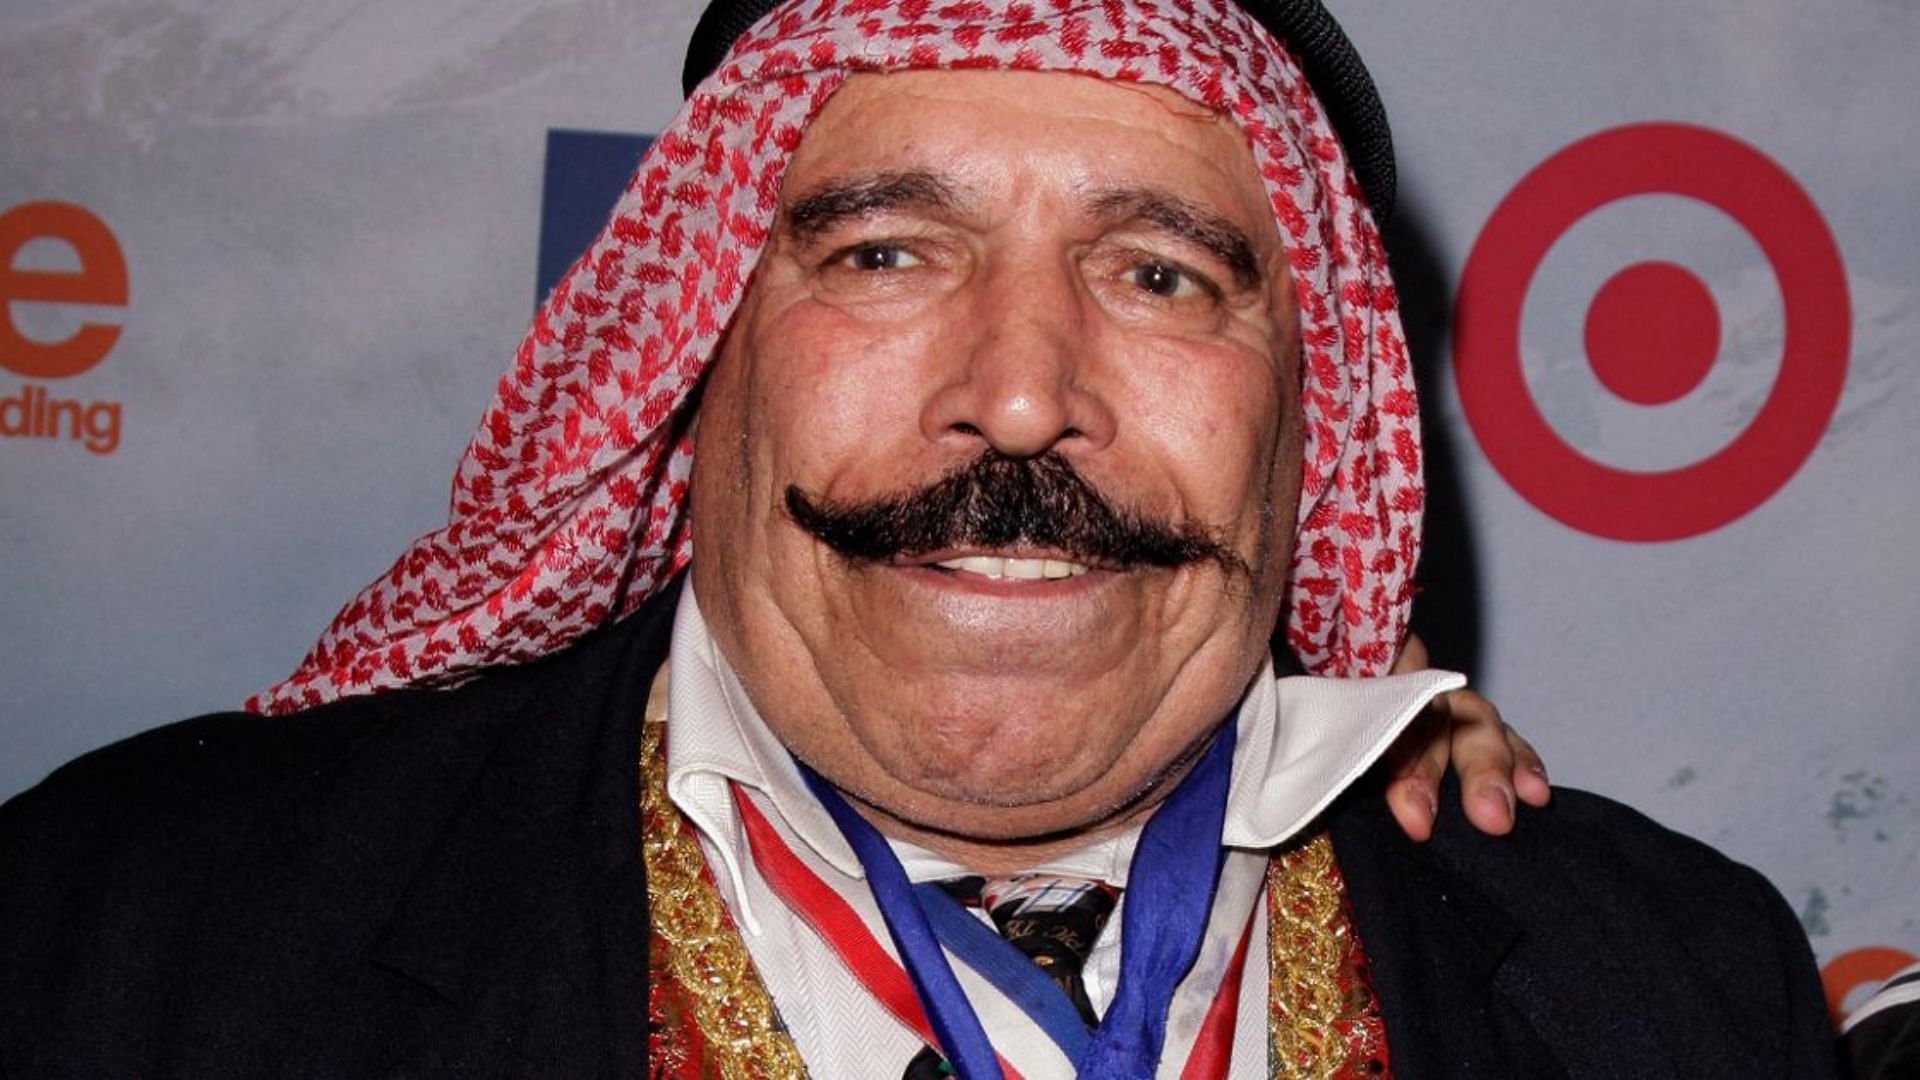 WWE Hall of Famer The Iron Sheik passes away at 81